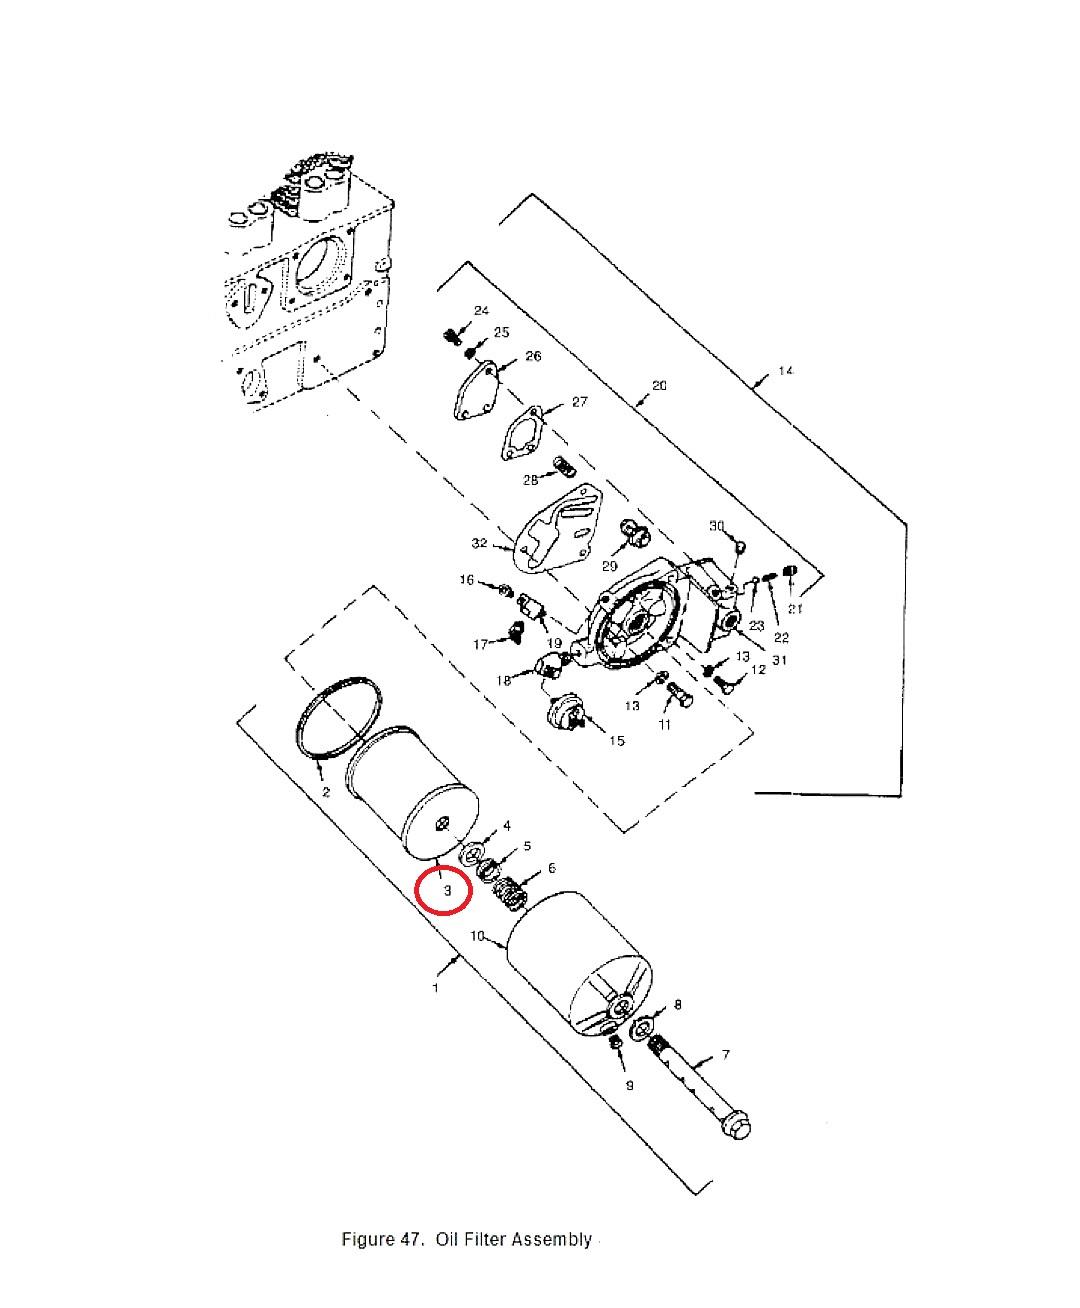 SP-2099 | SP-2099 Onan Generator Engine Oil Filter Parts Diagram (Large).JPG